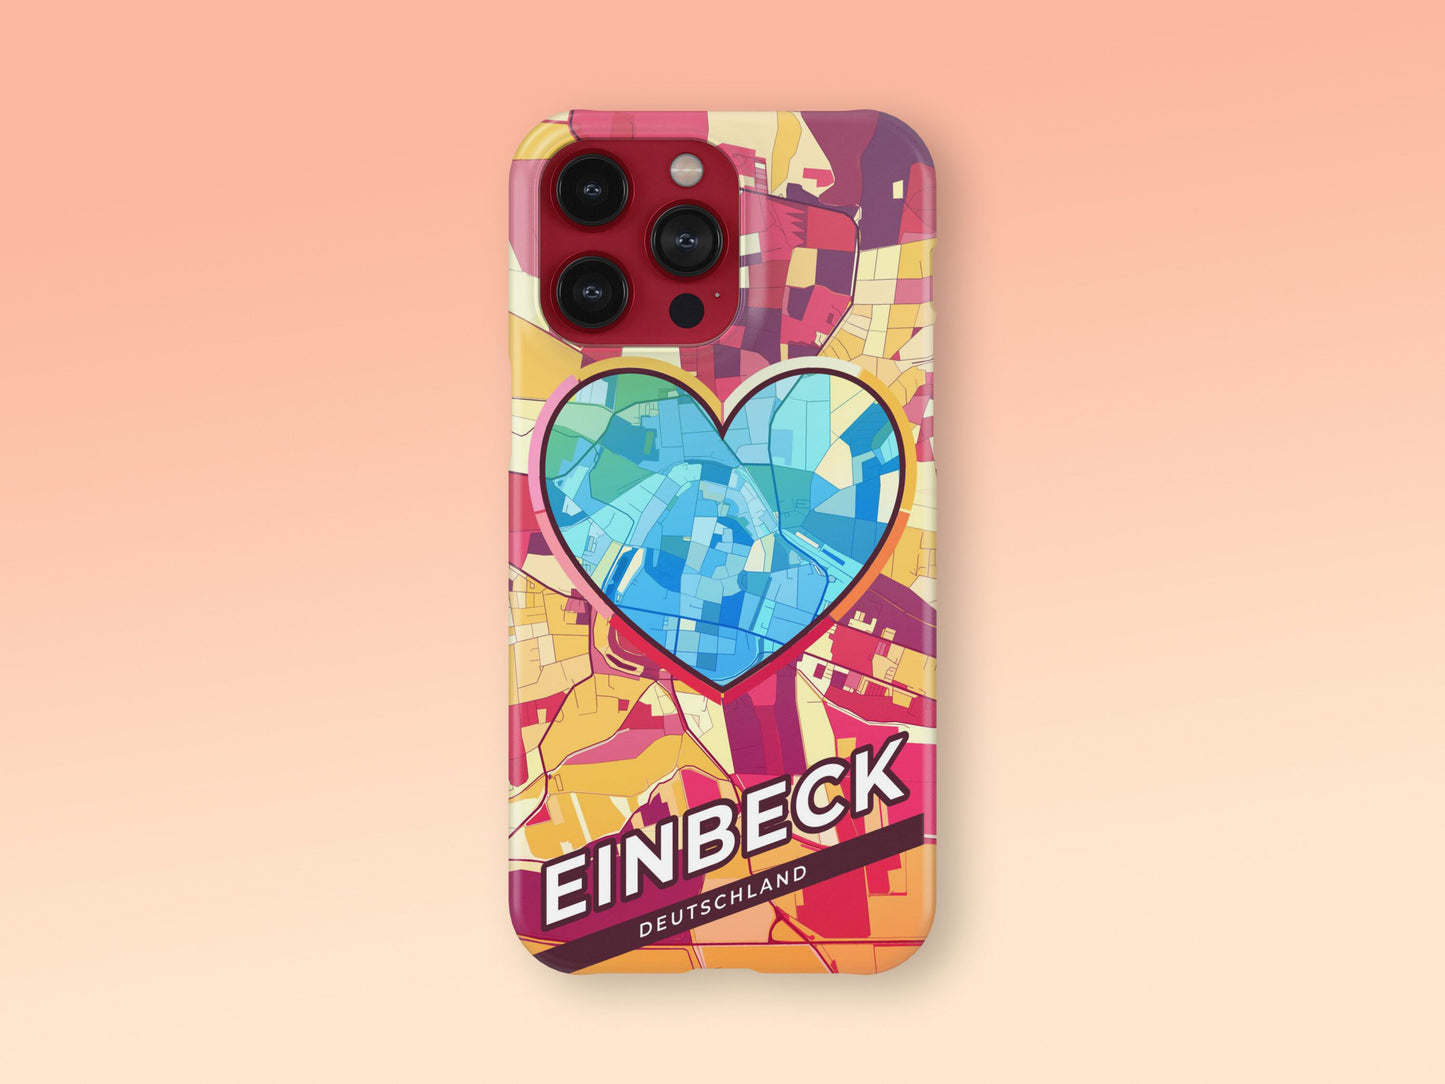 Einbeck Deutschland slim phone case with colorful icon. Birthday, wedding or housewarming gift. Couple match cases. 2